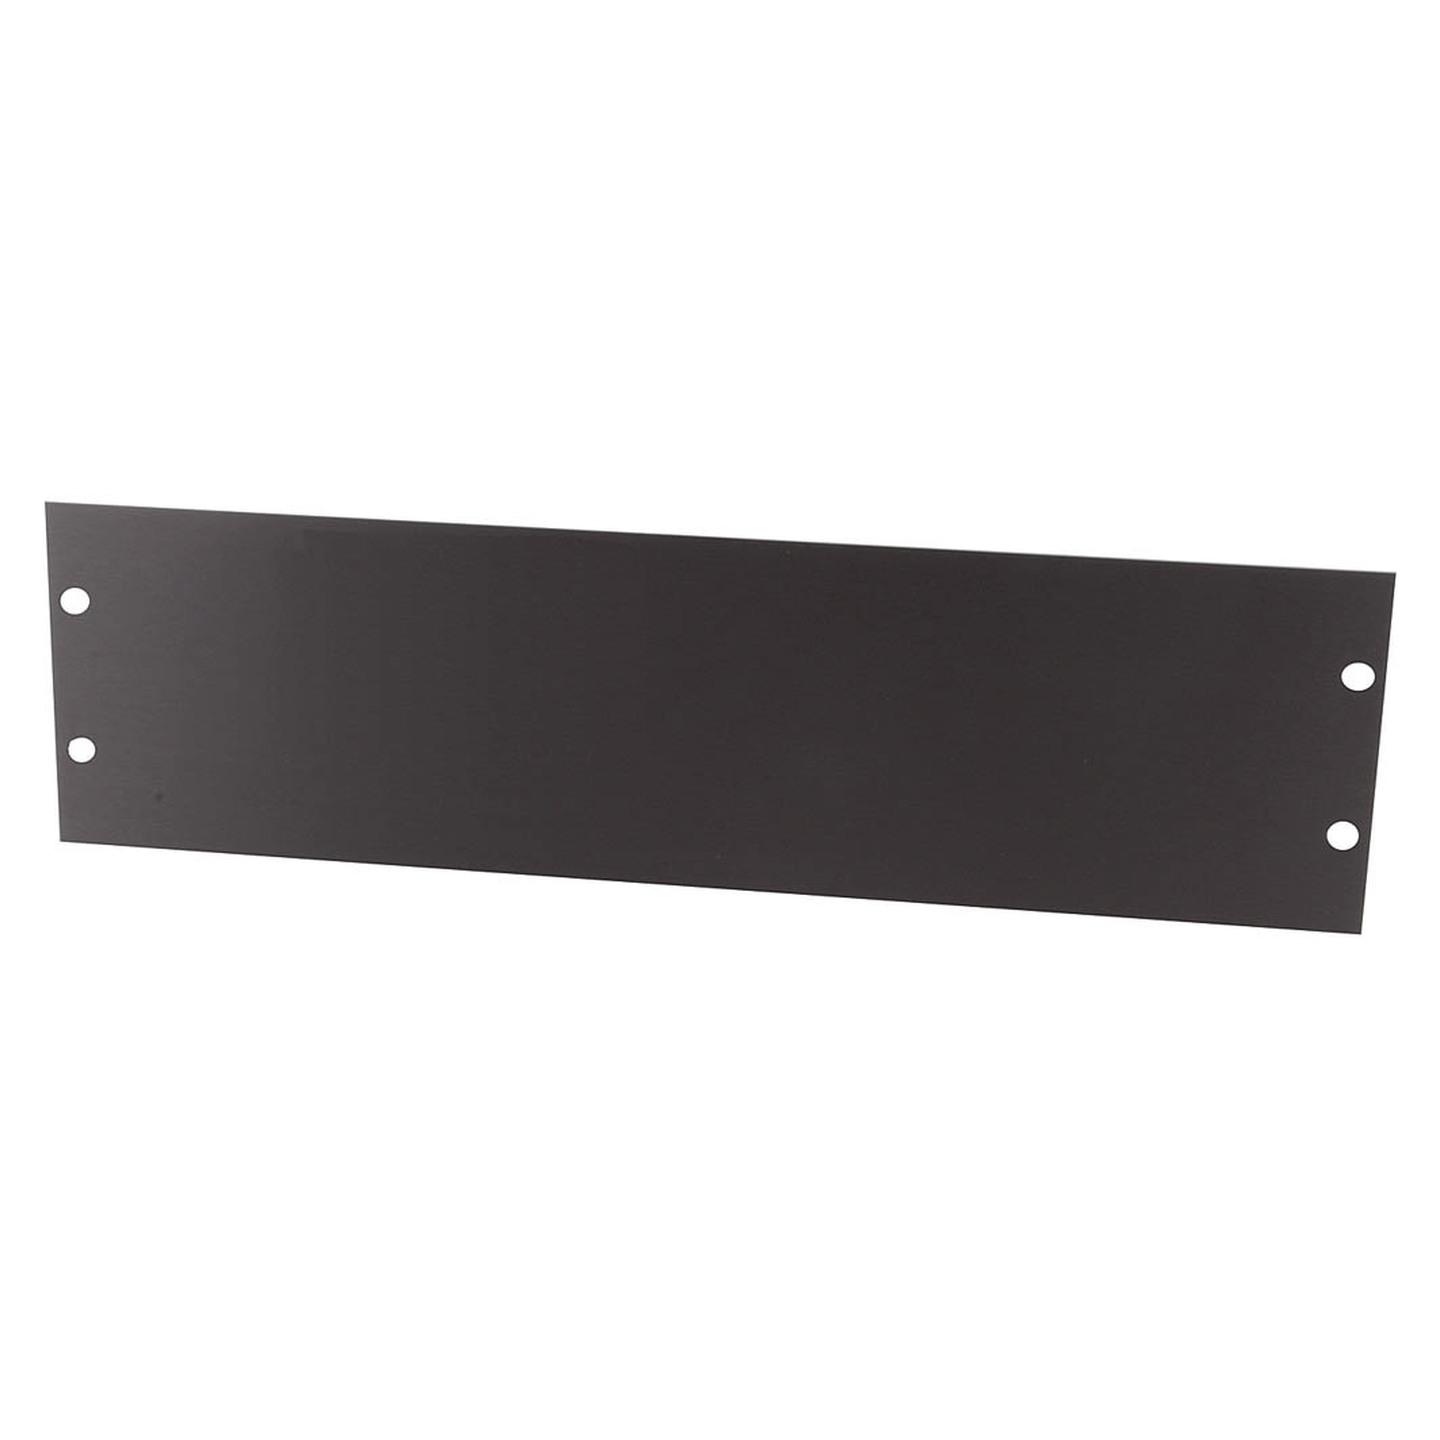 Aluminium 132mm 3U Rack Cabinet Panel - Black Finish